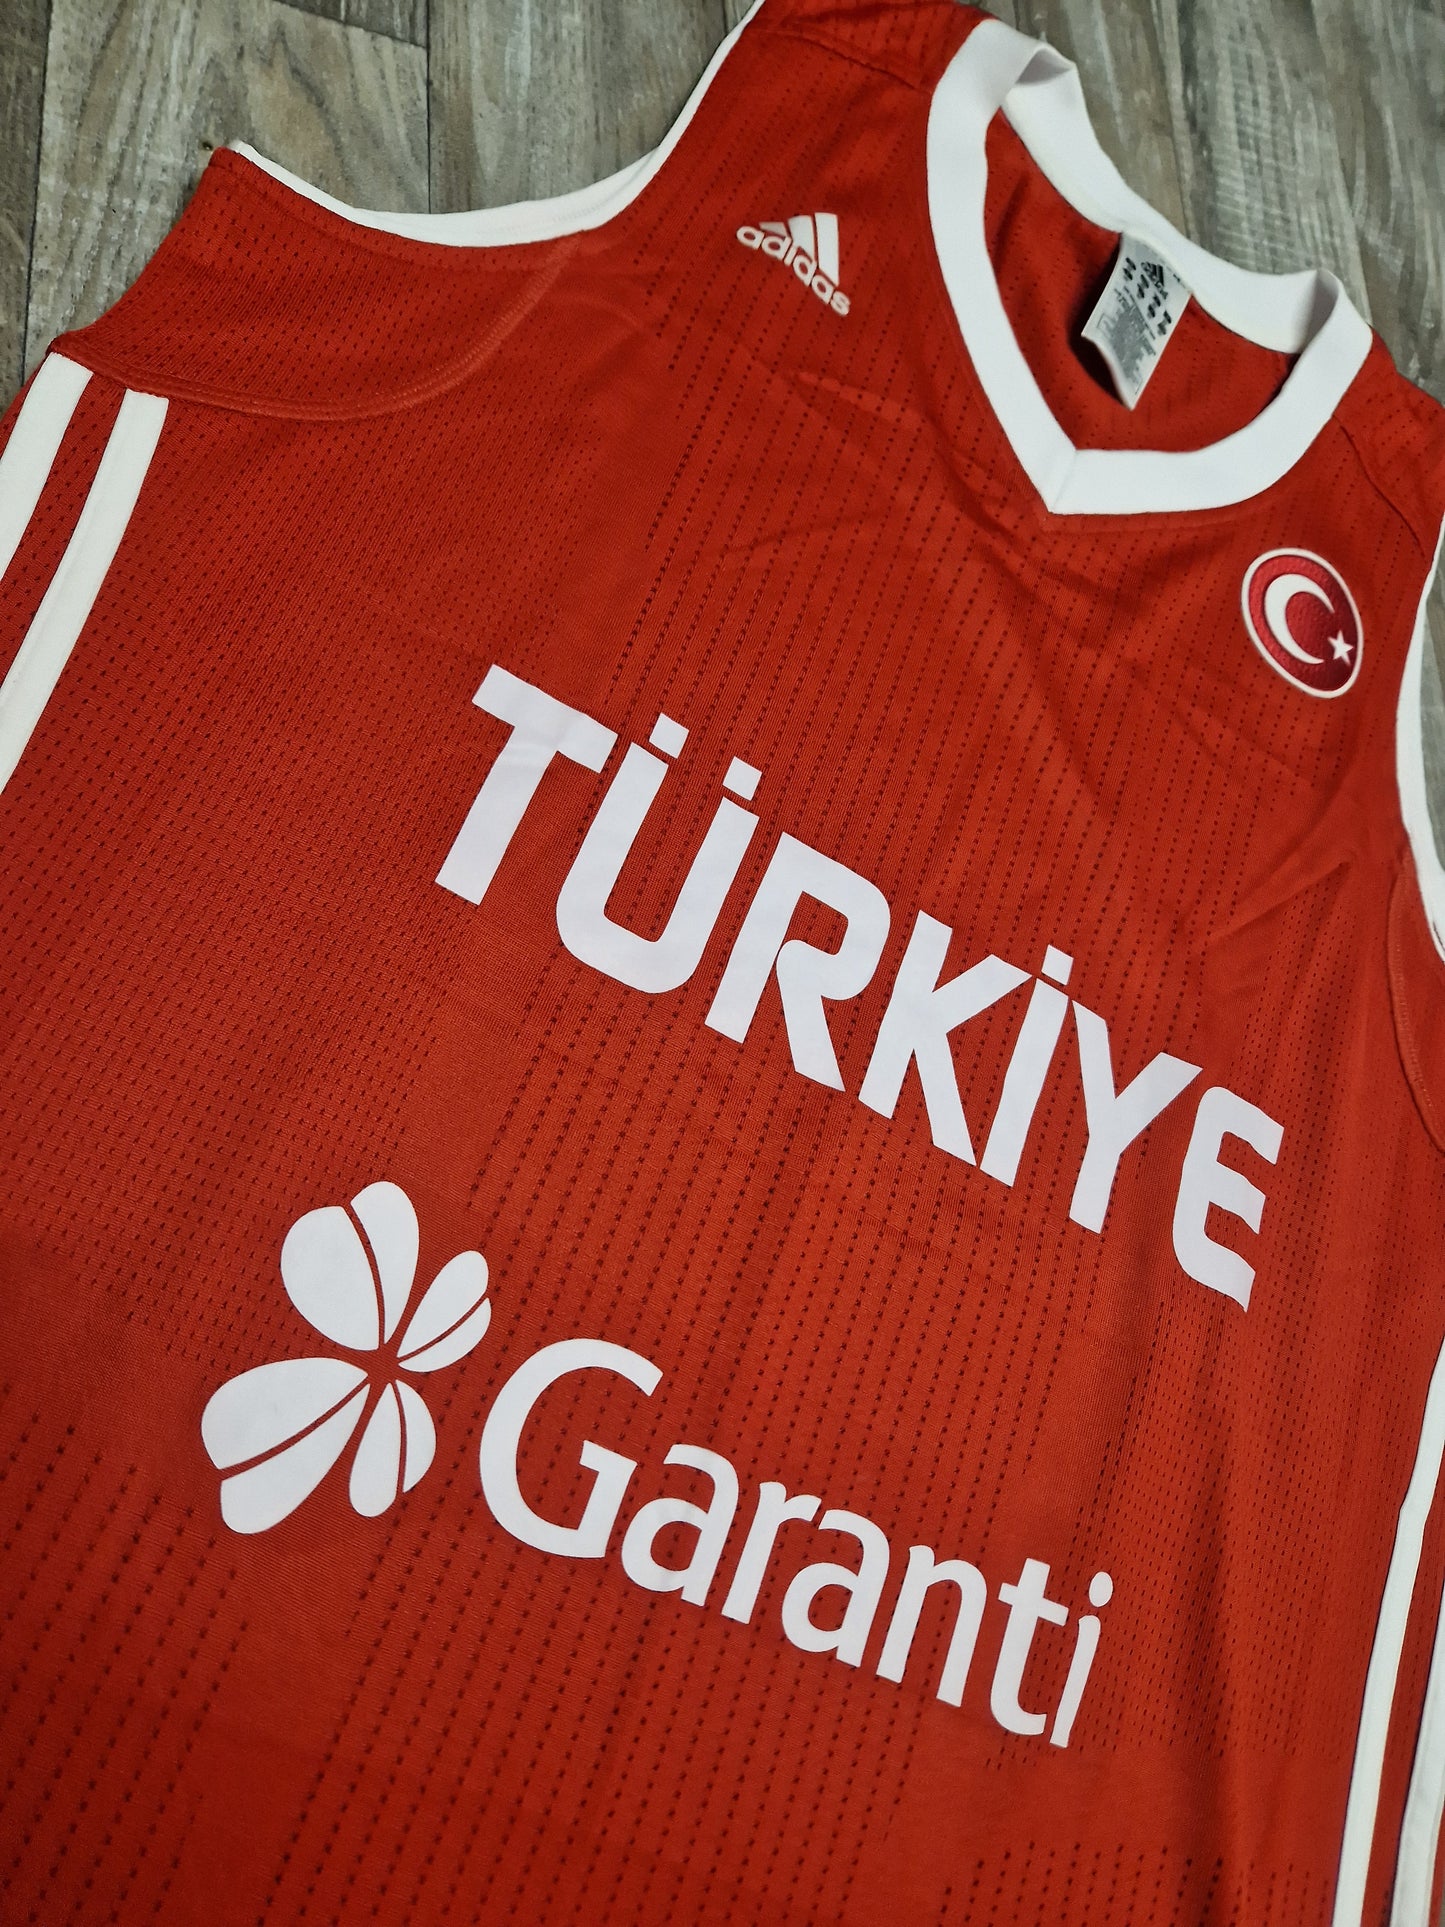 Turkey Basketball Jersey Size Medium